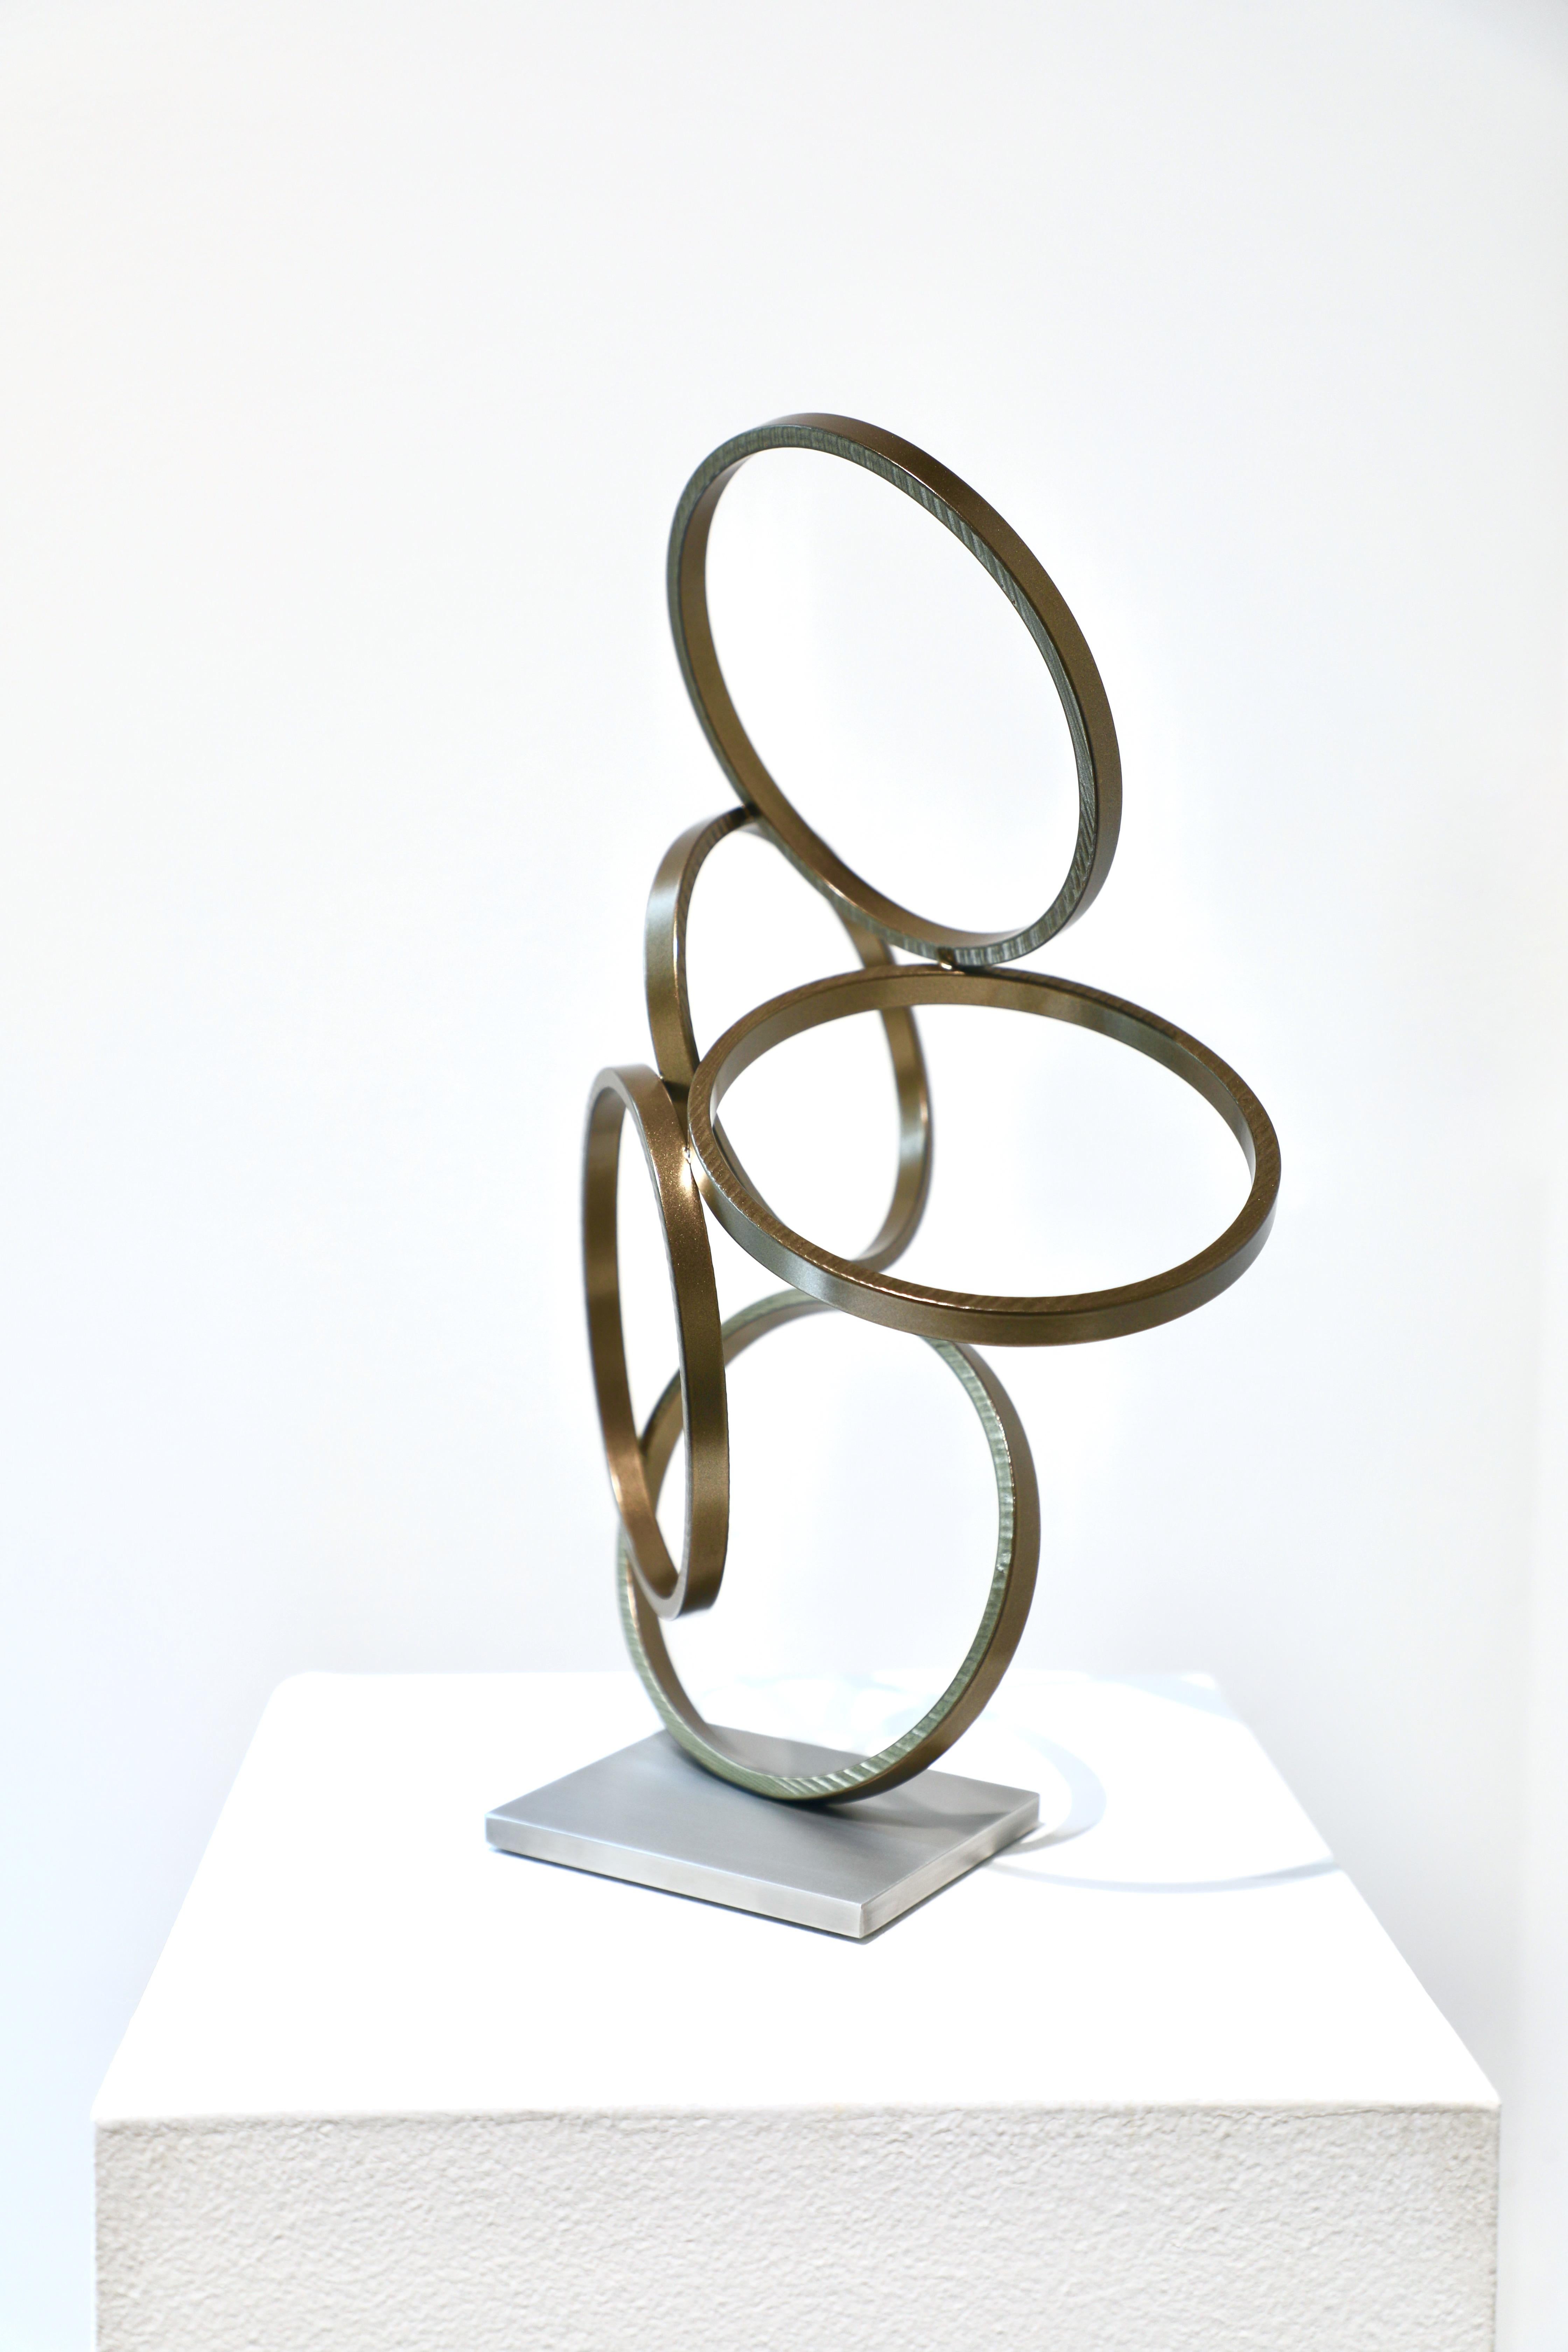 PS Study - Sculpture by Matt Devine